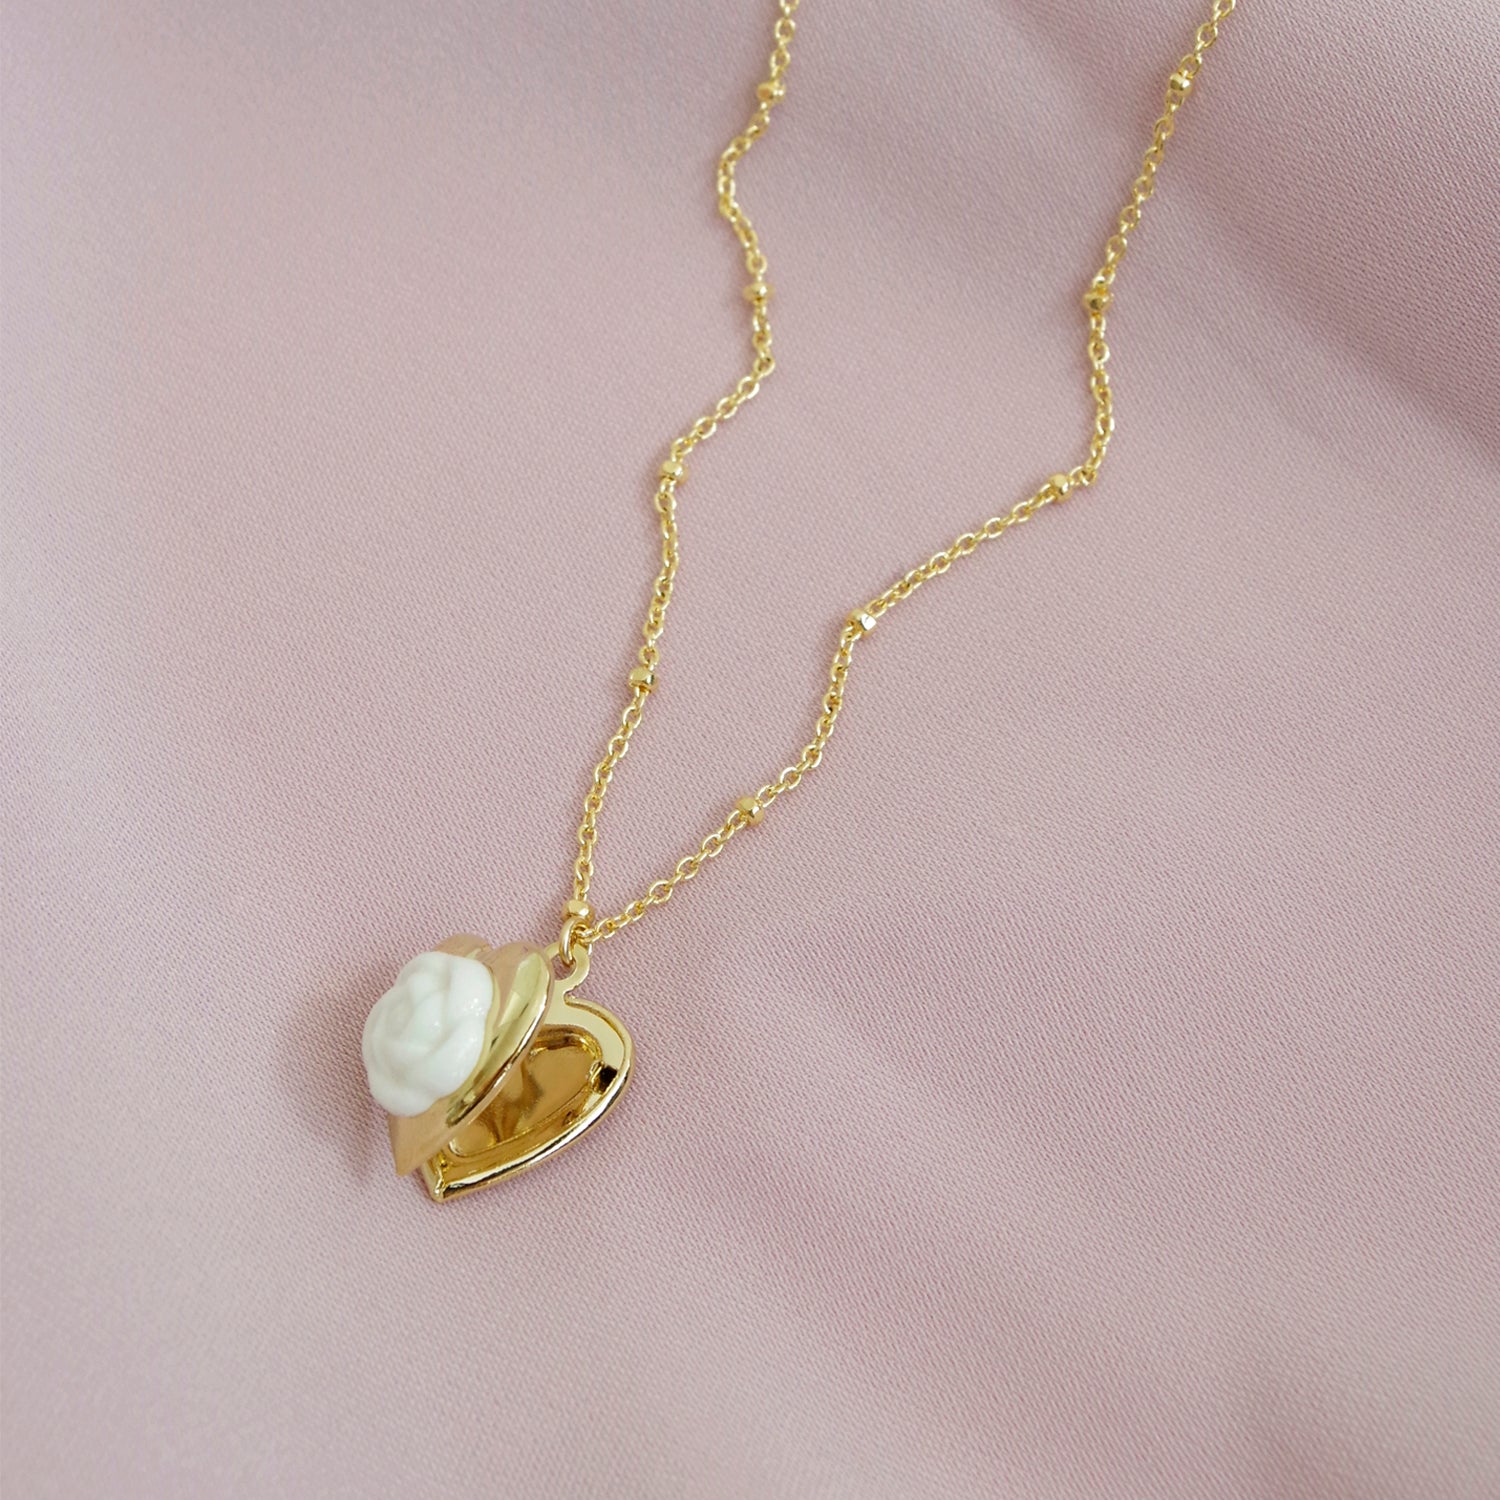 Mini Camellia Heart Locket Necklace